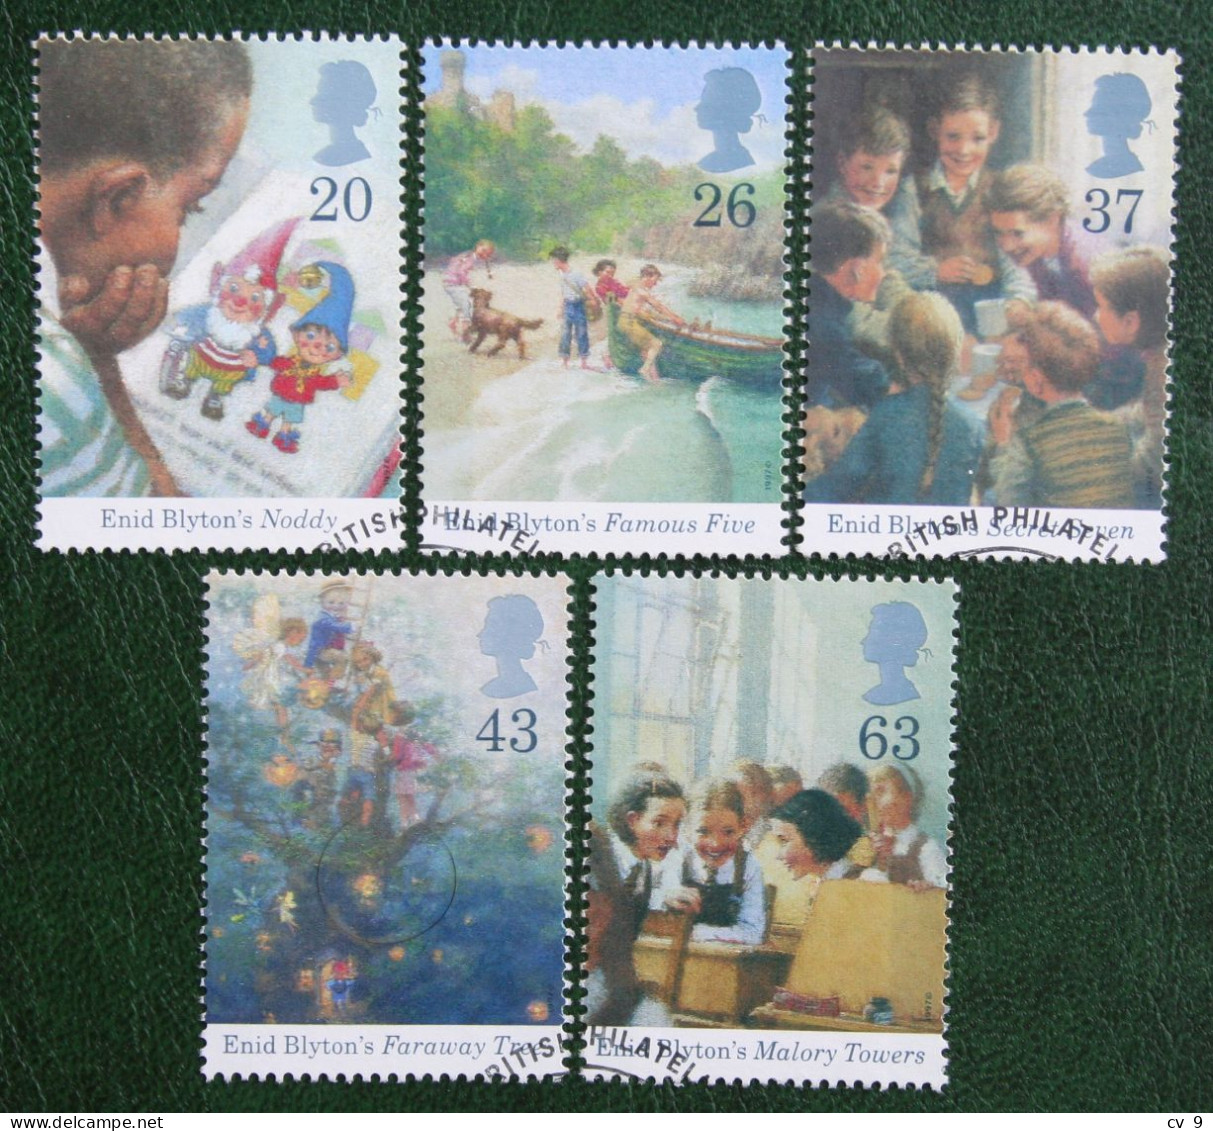 100th Birthday Of Enid Blyton (Mi 1709-1713) 1997 Used Gebruikt Oblitere ENGLAND GRANDE-BRETAGNE GB GREAT BRITAIN - Used Stamps